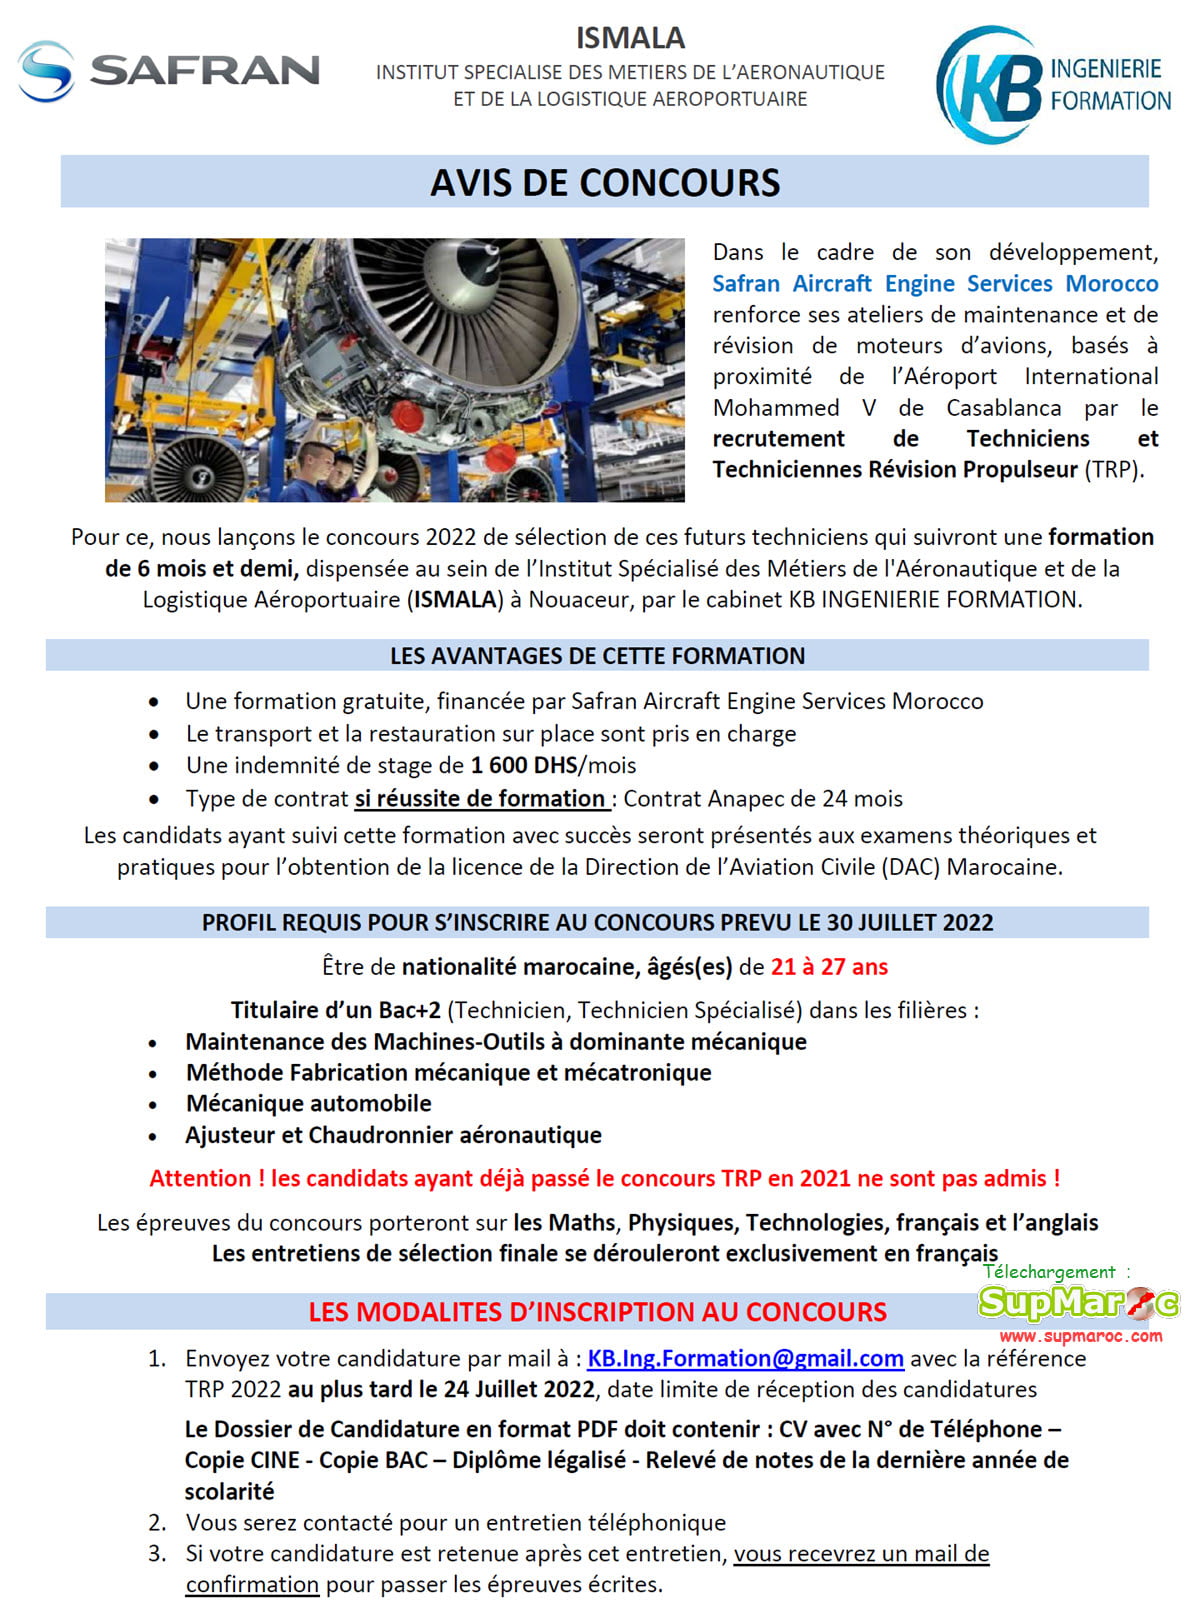 ISMALA Recrutement techniciens Safran Aircraft Engine Services Morocco 2022
Révision Propulseur TRP 2022